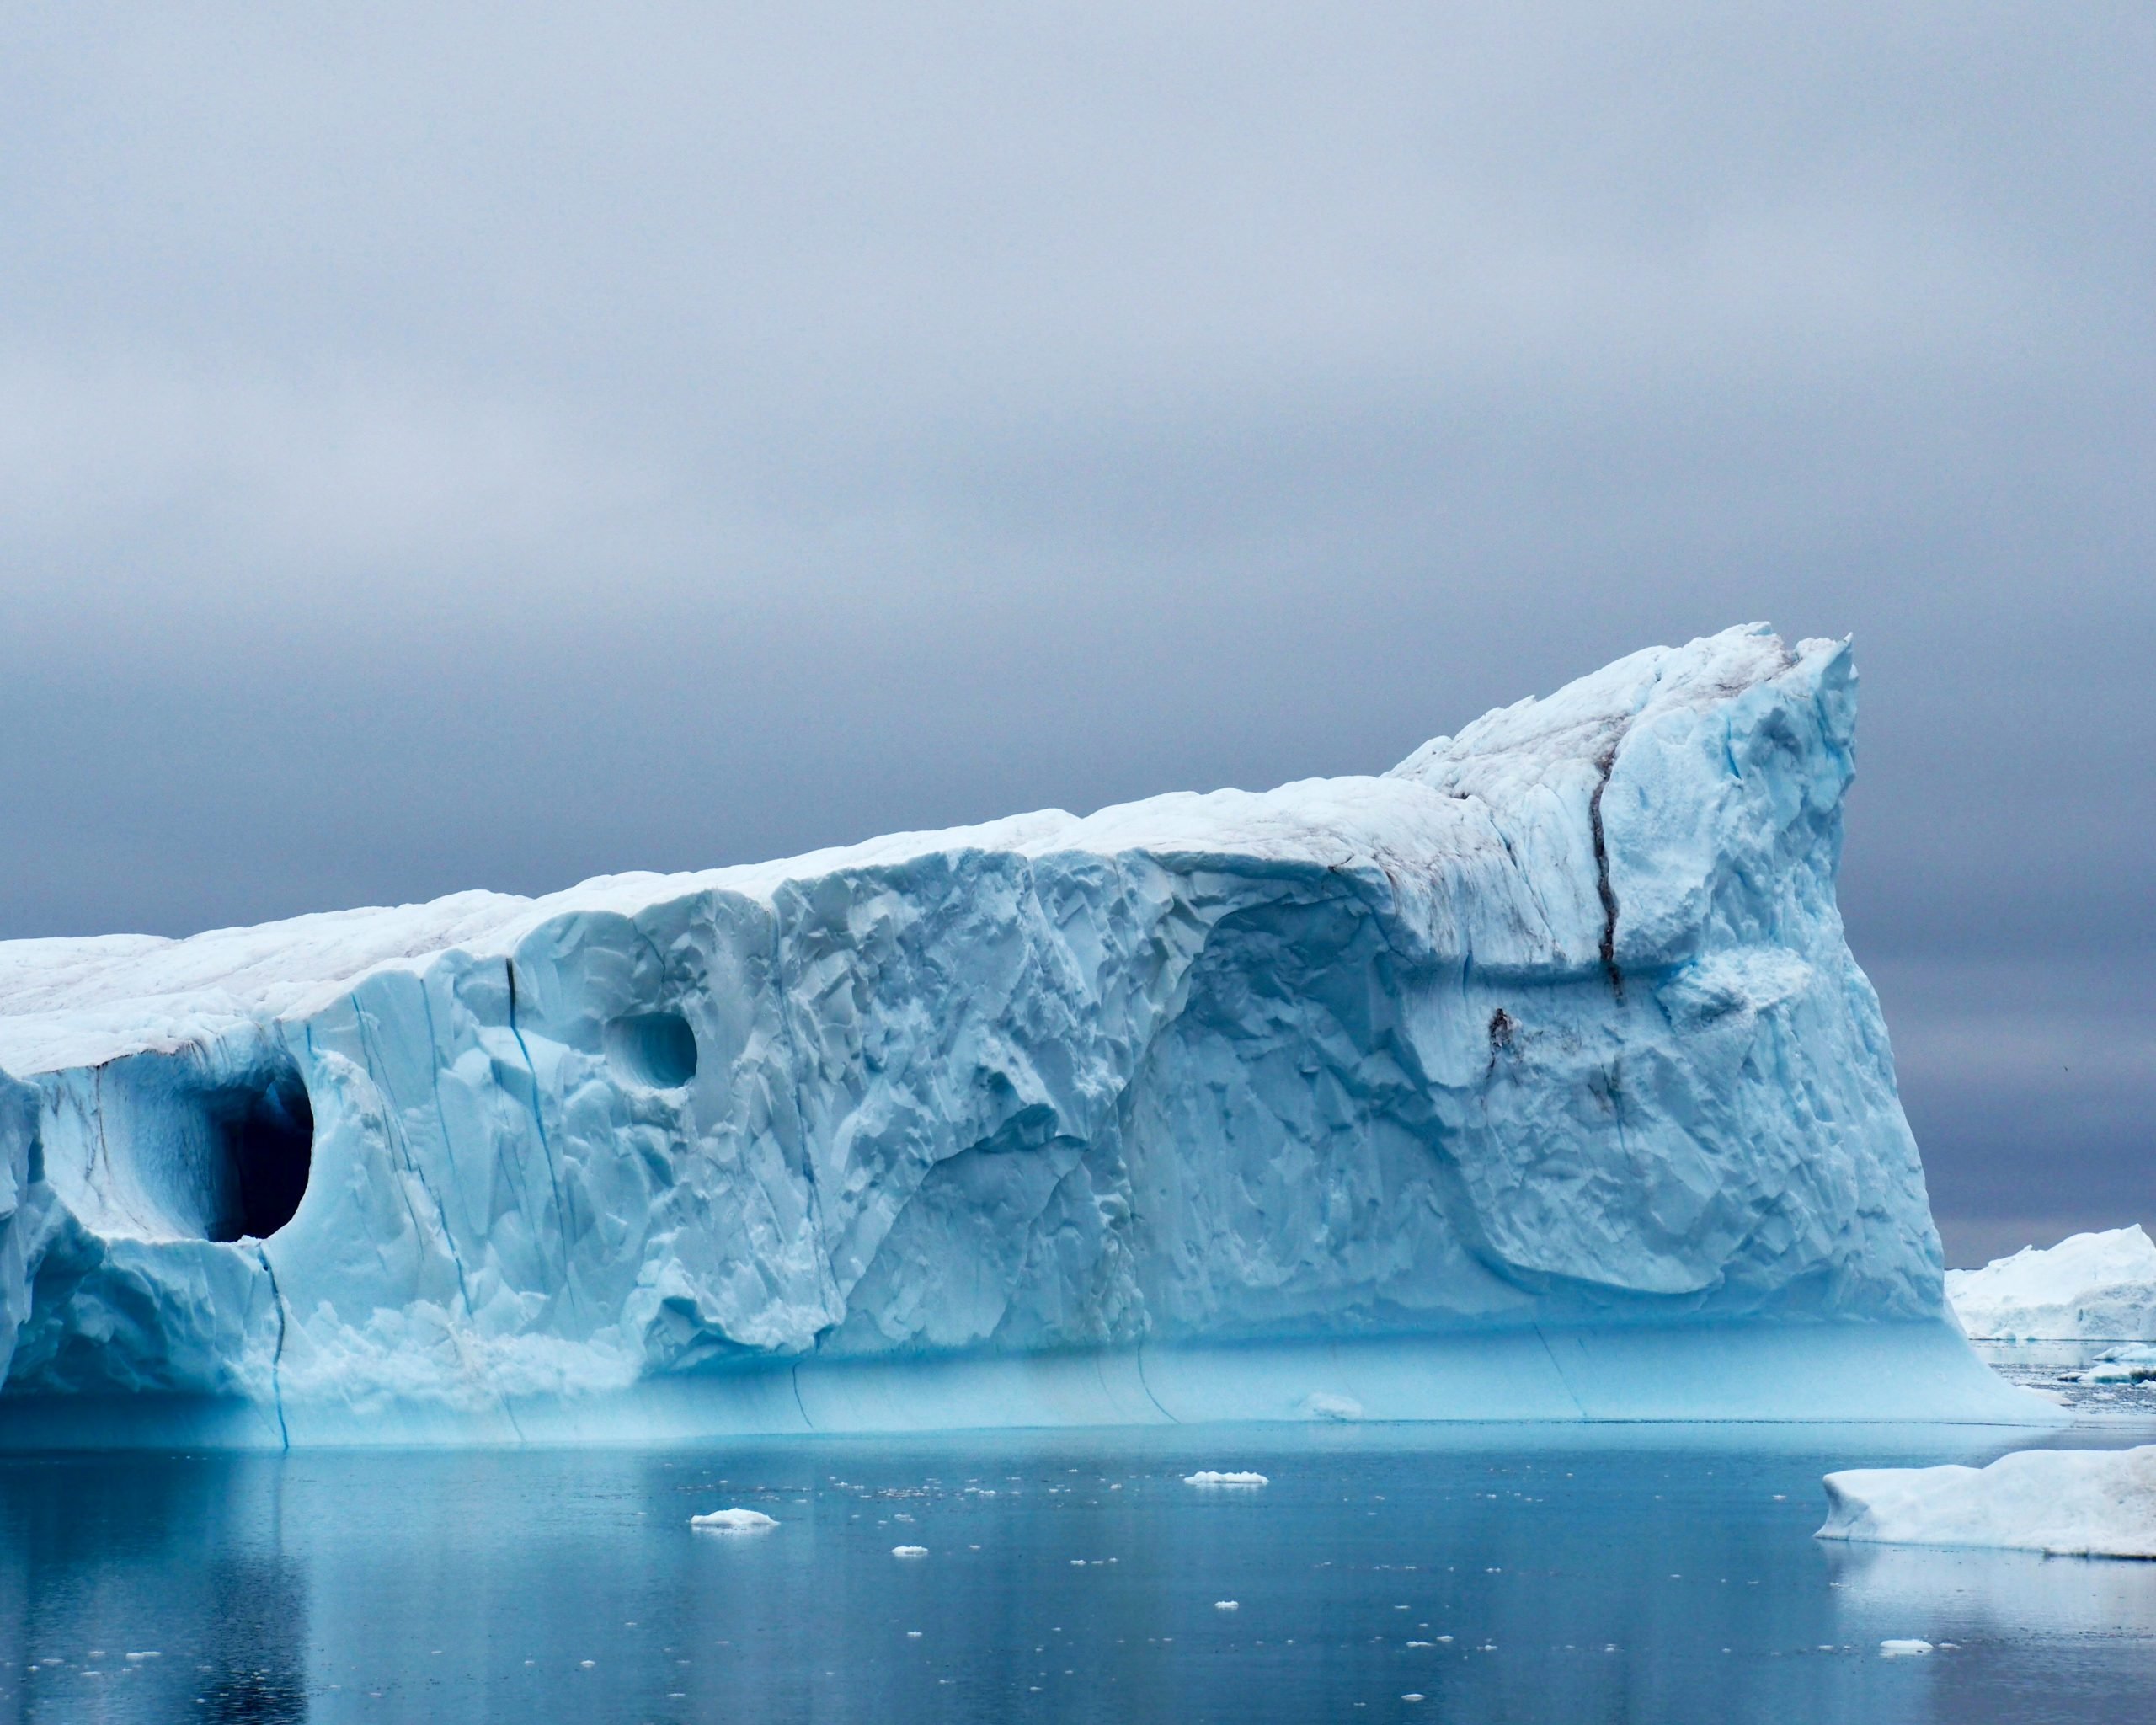 sea kayaking with icebergs